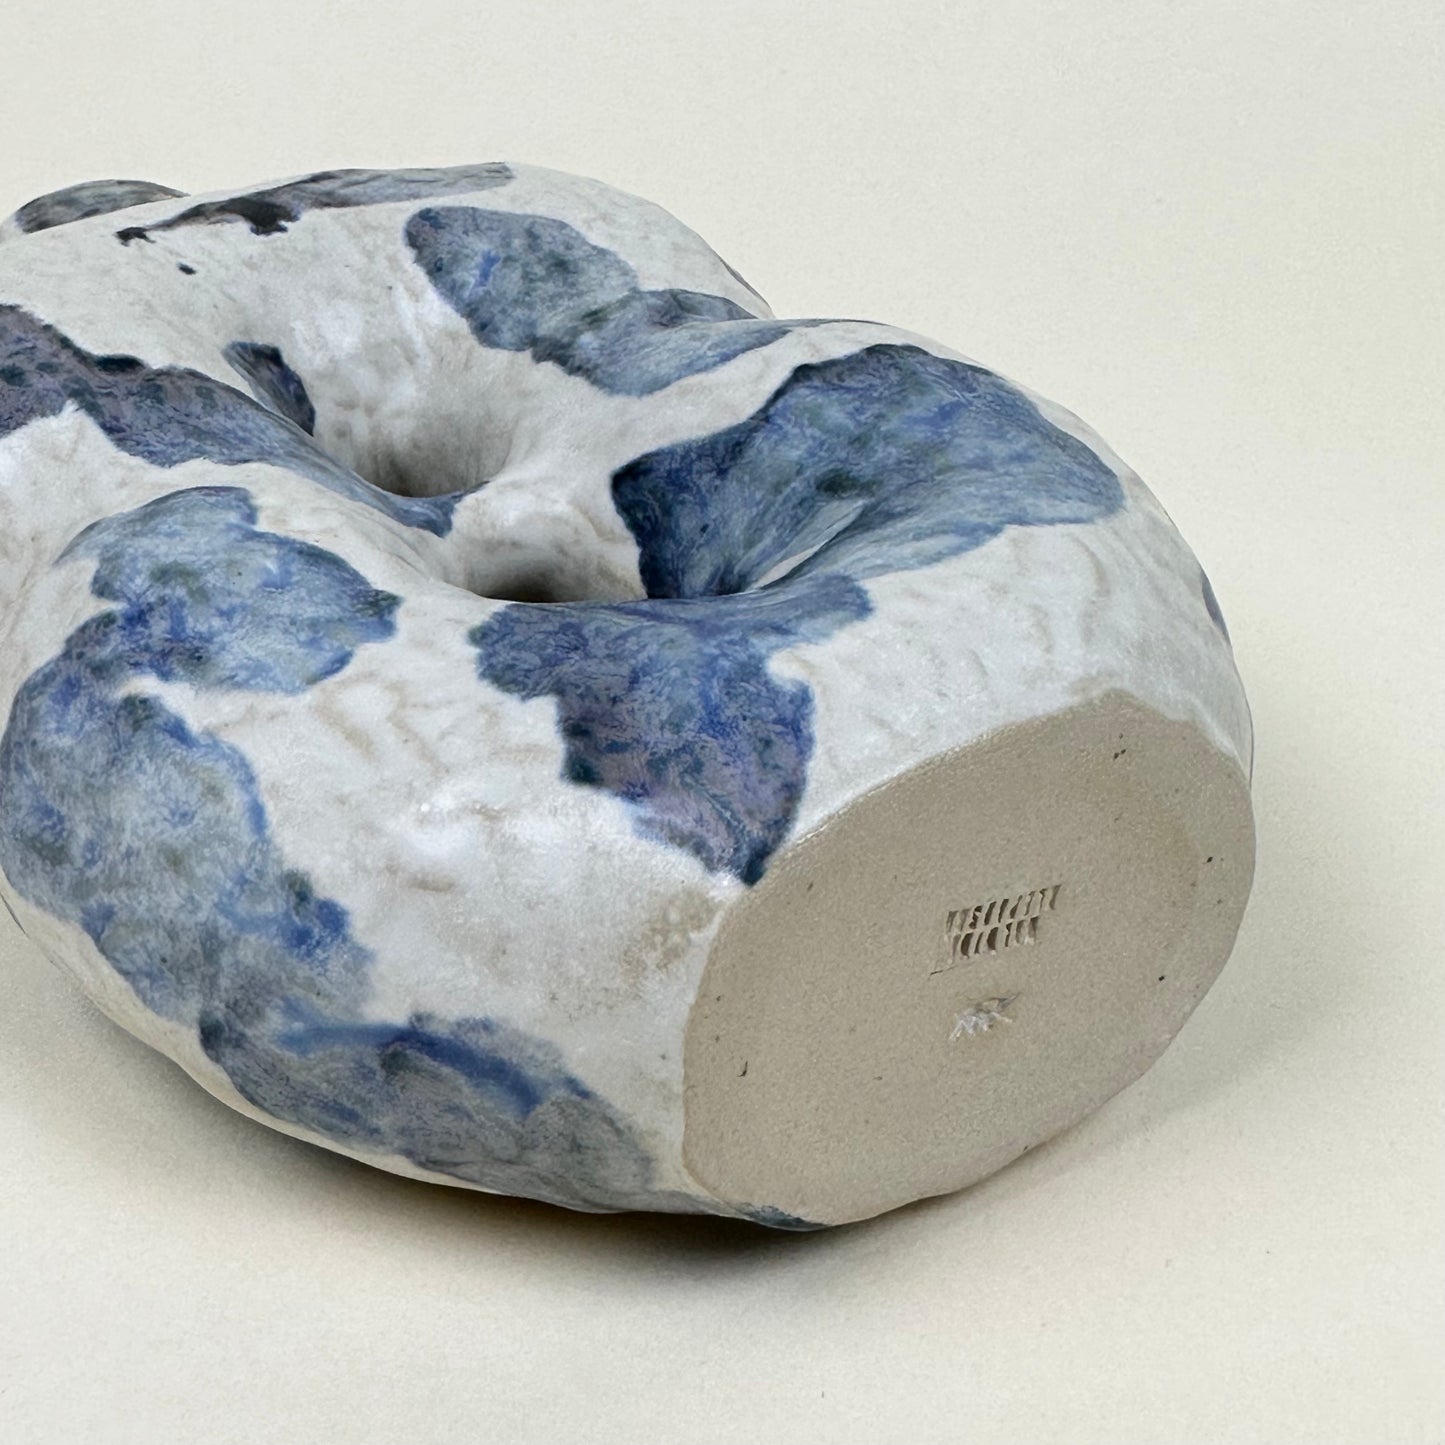 White and blue stoneware vase with two holes by Malwina Kleparska